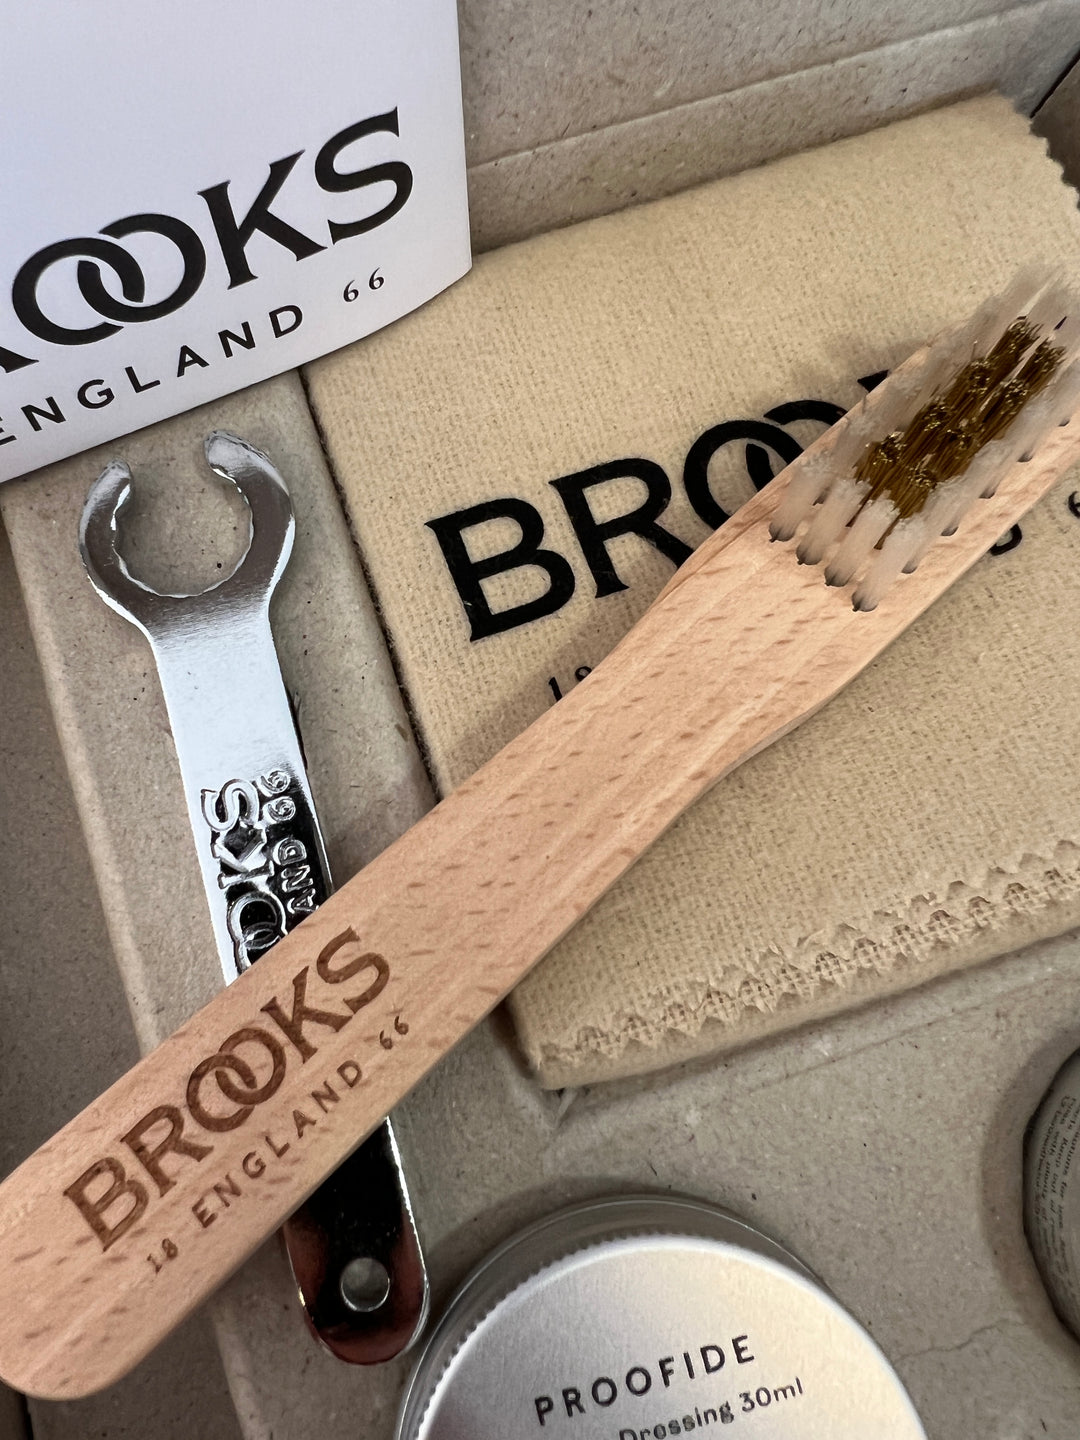 Brooks Leather Saddle Care Kit